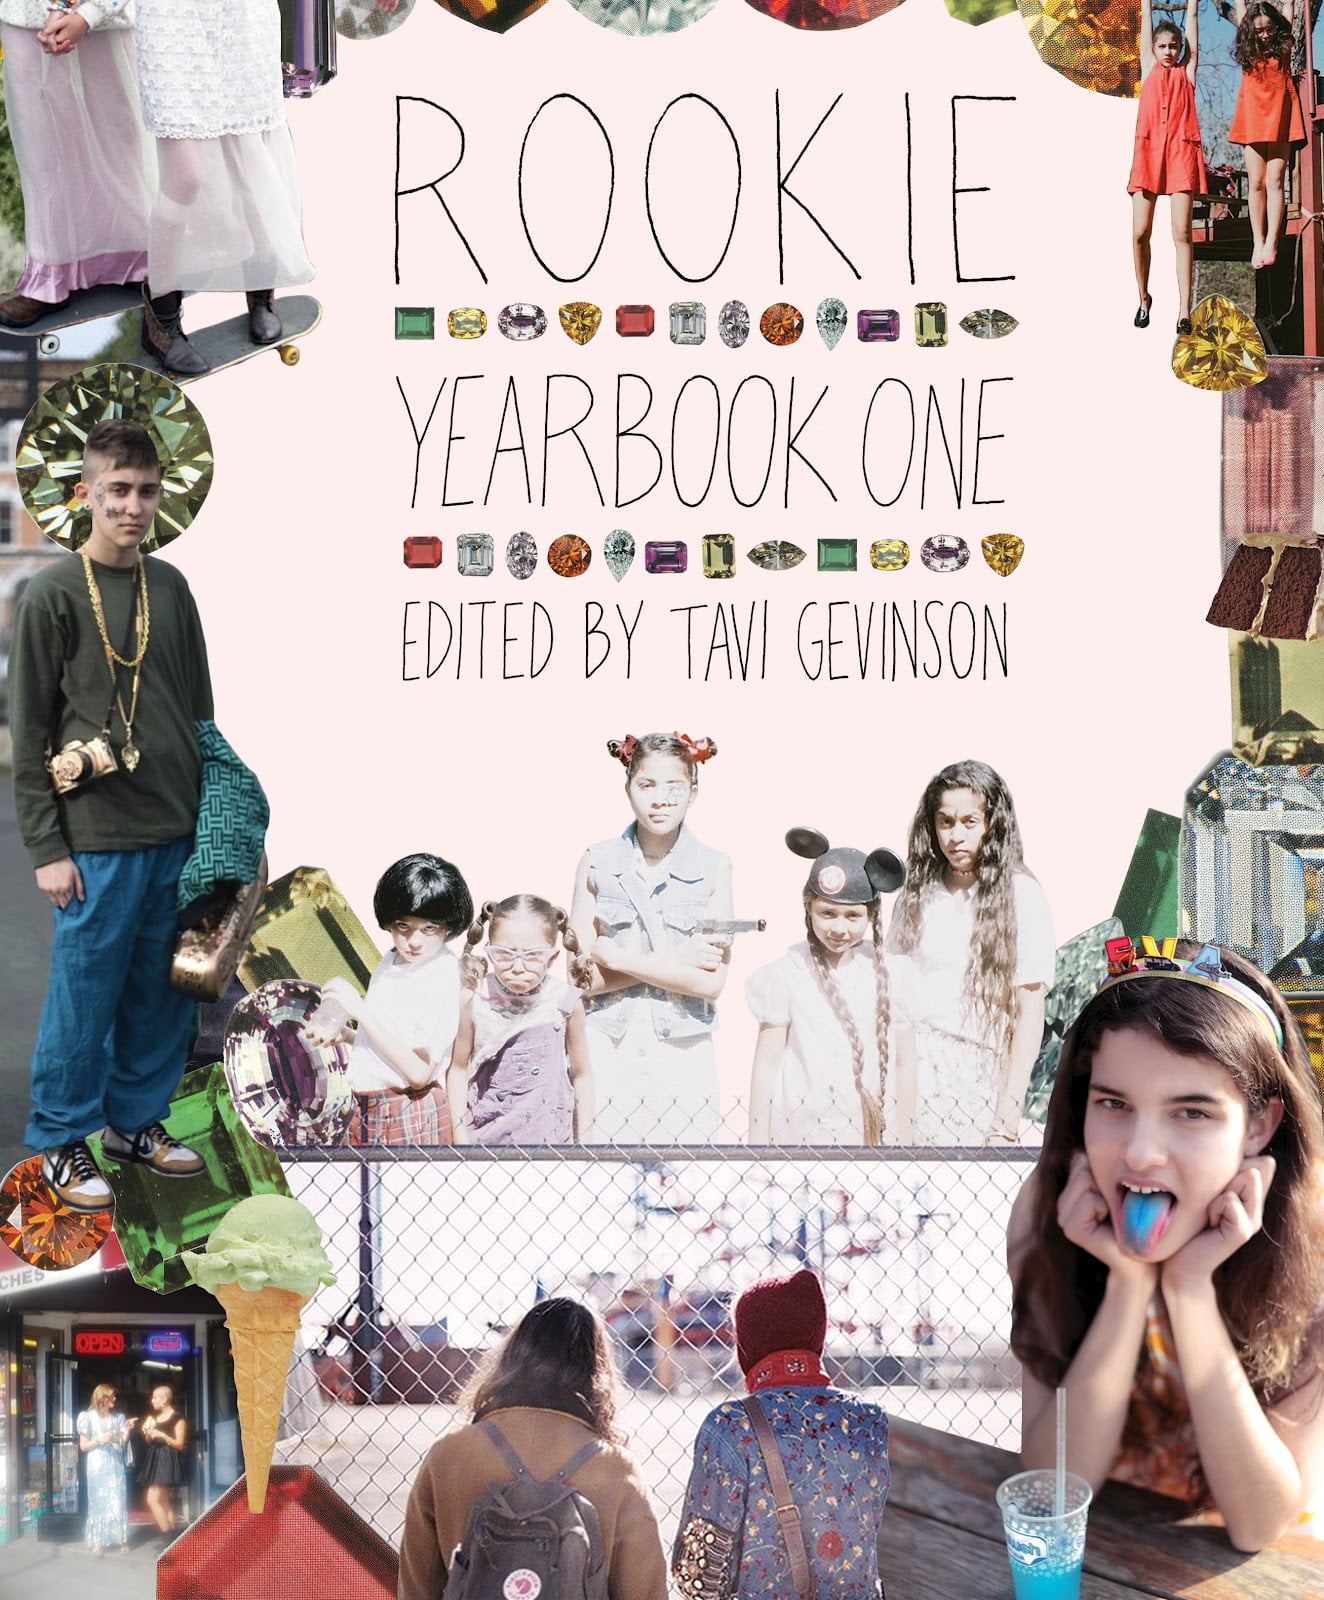 Creating an alt-girl utopia: Tavi Gevinson’s Rookie Yearbook One